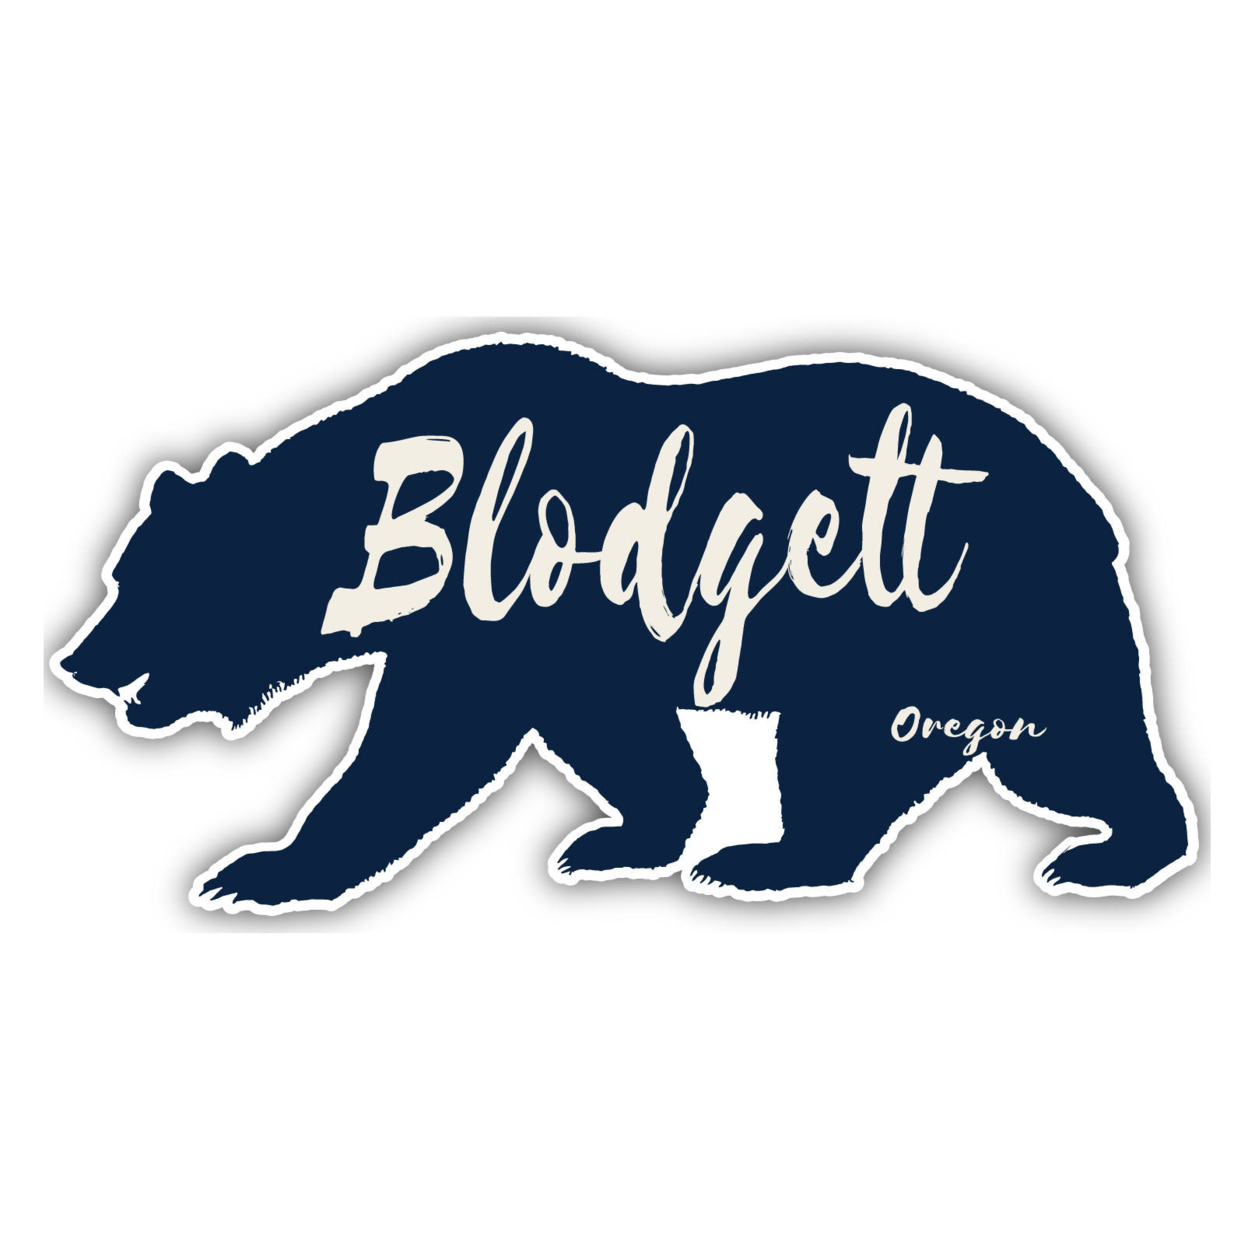 Blodgett Oregon Souvenir Decorative Stickers (Choose Theme And Size) - 4-Pack, 8-Inch, Bear